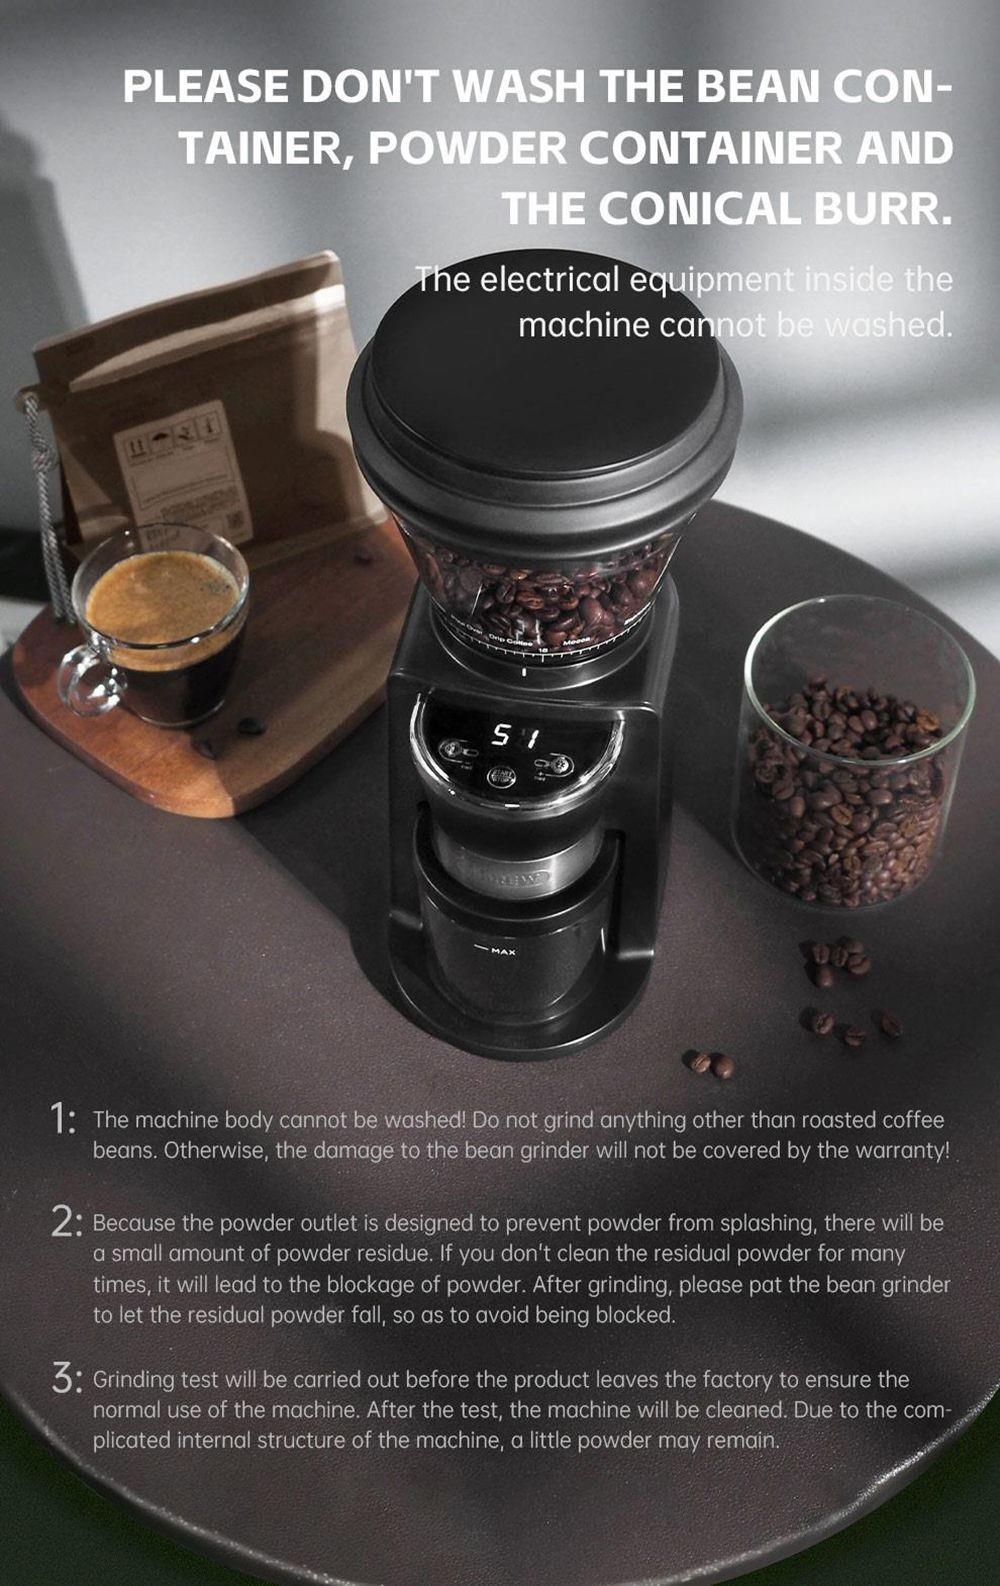 HiBREW G3 elektrische koffiemolen, 34-versnellingen, 210g bonencontainer, 100g poedertank, 48mm conische maler